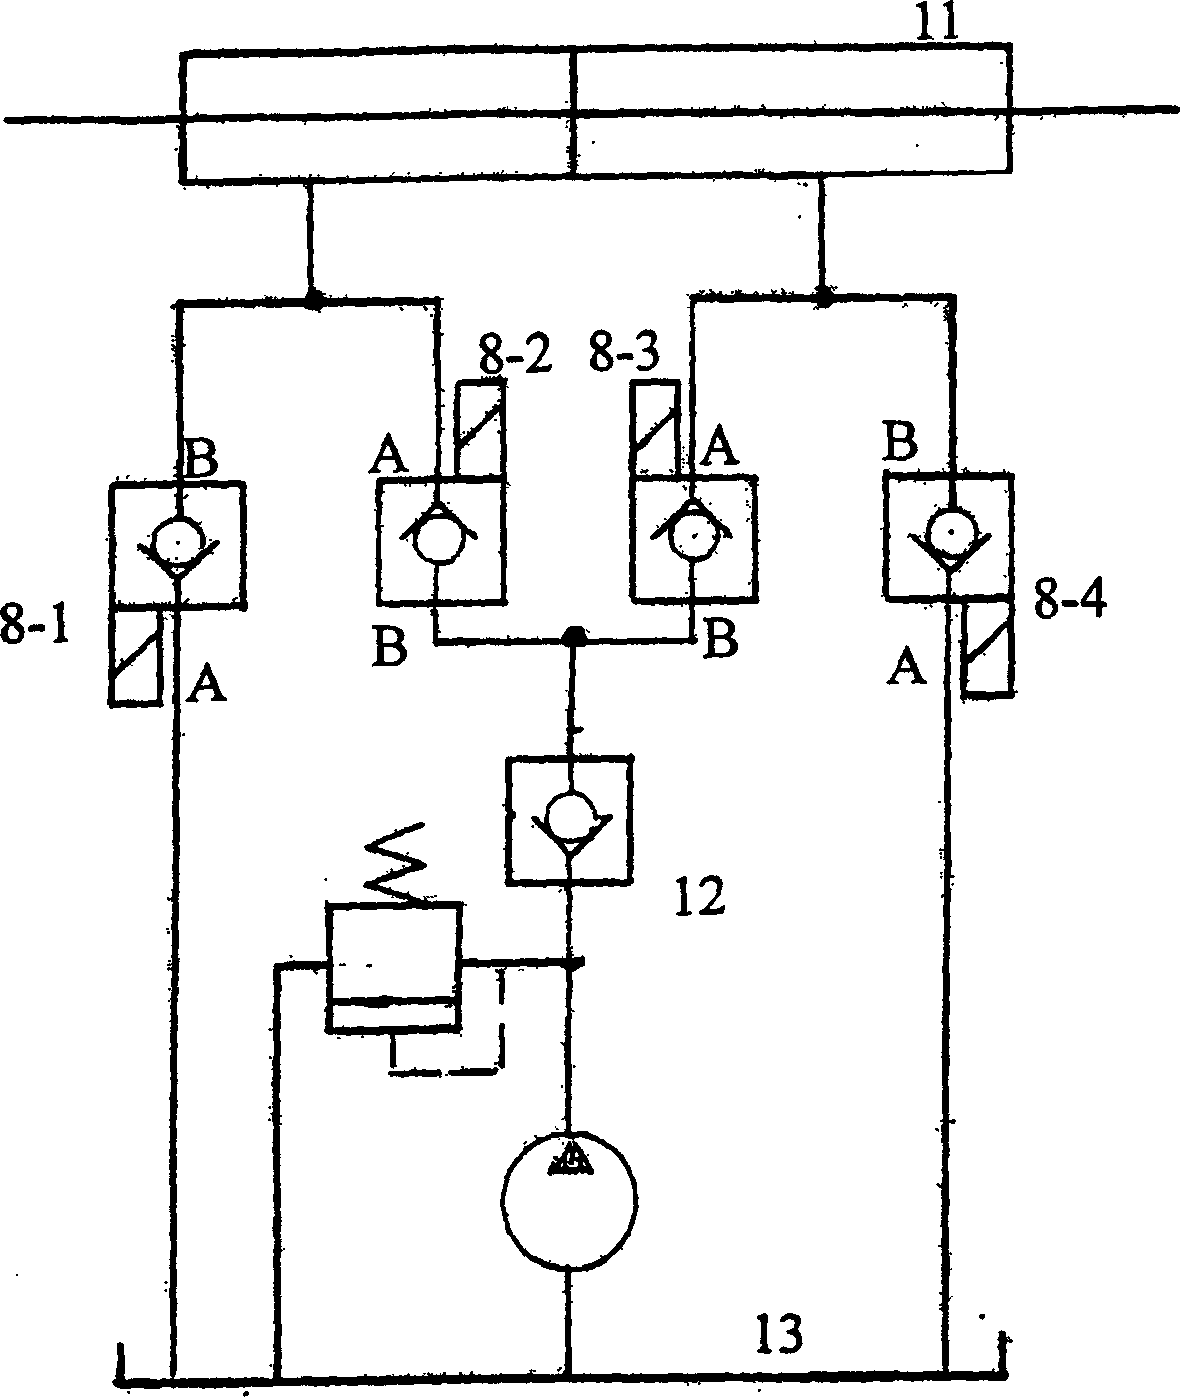 Electric control one-way valve